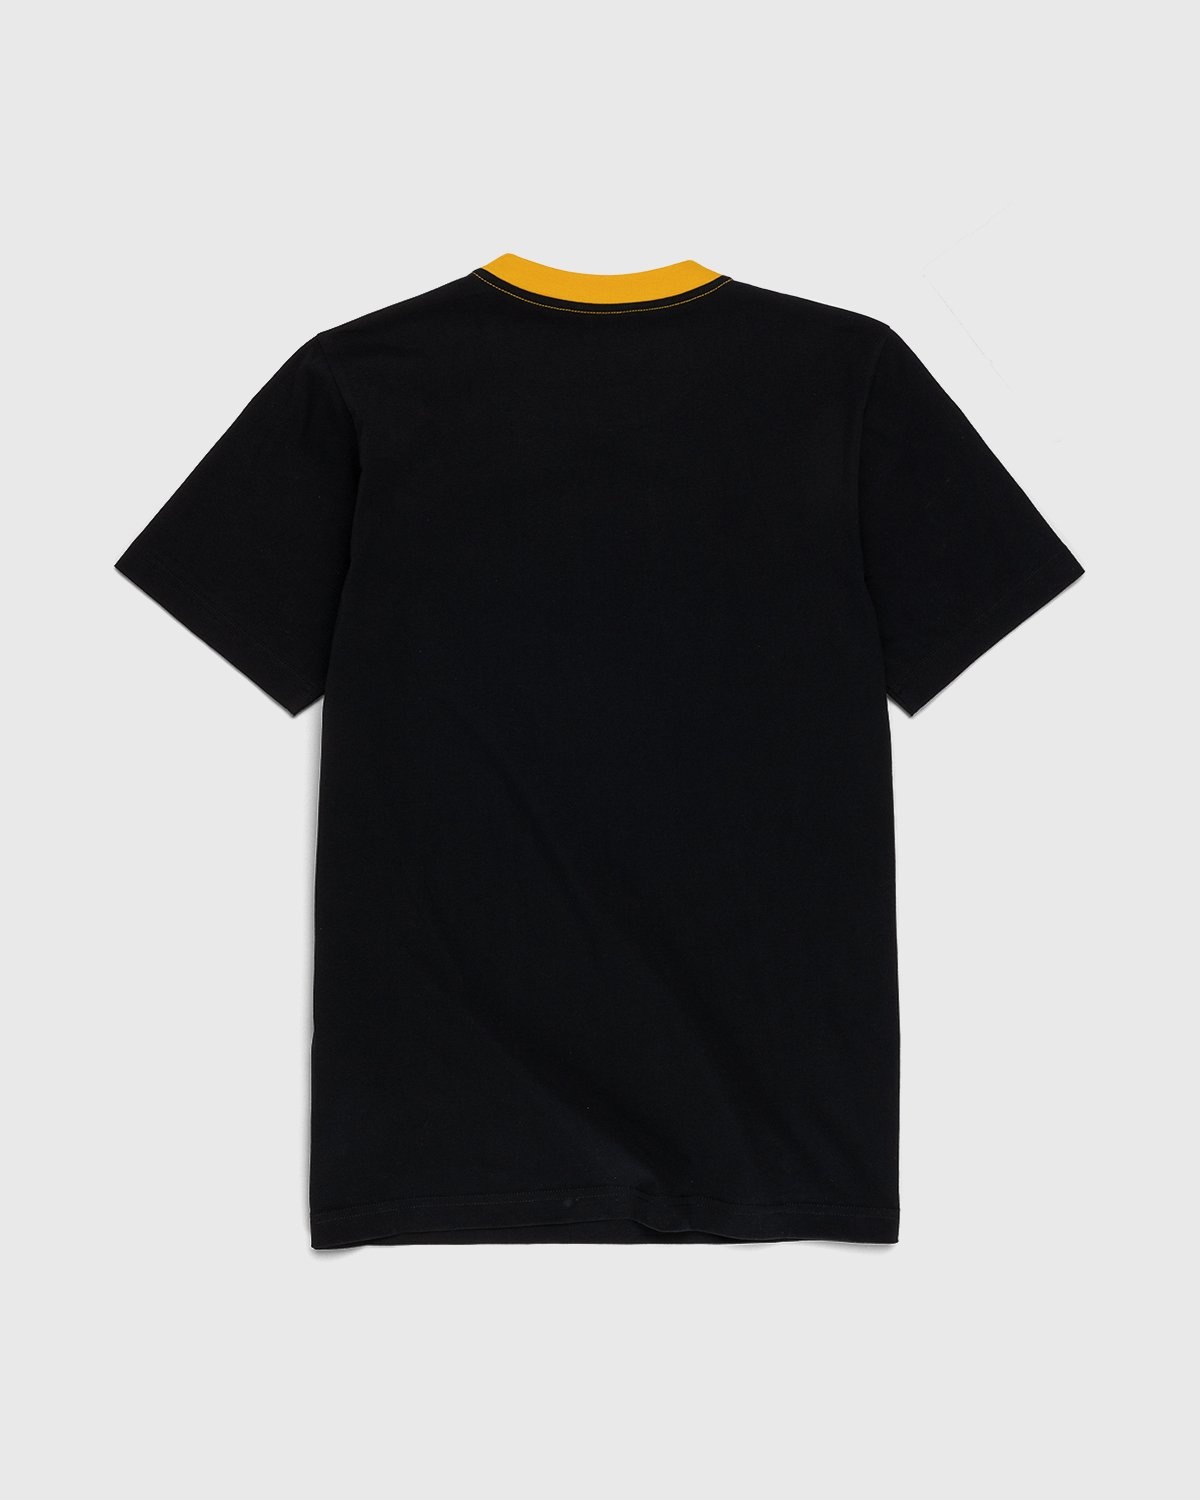 Marni – Stripe Logo Bio Jersey T-Shirt Black/Gold - T-Shirts - Yellow - Image 2